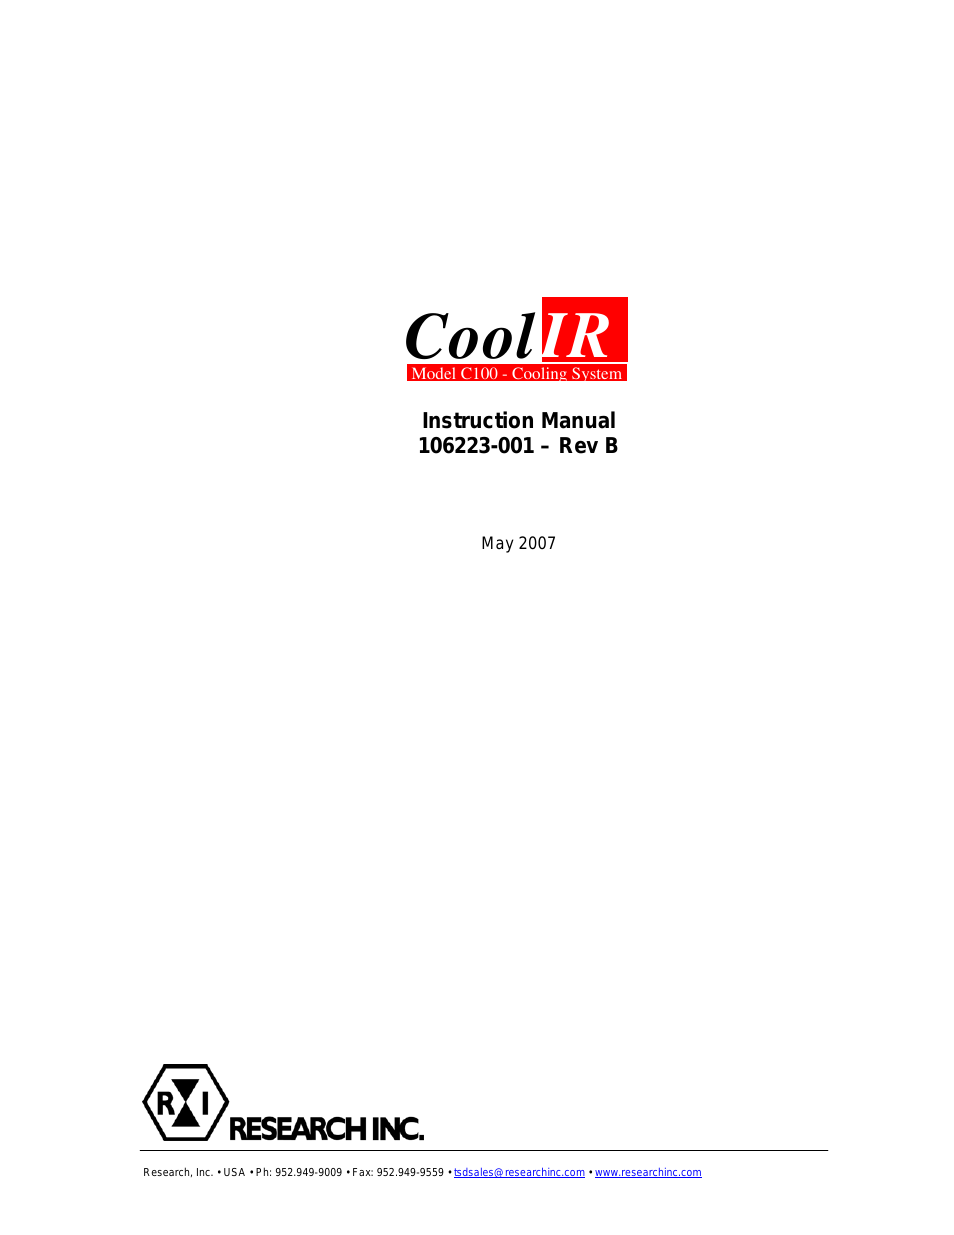 CoolIR C100